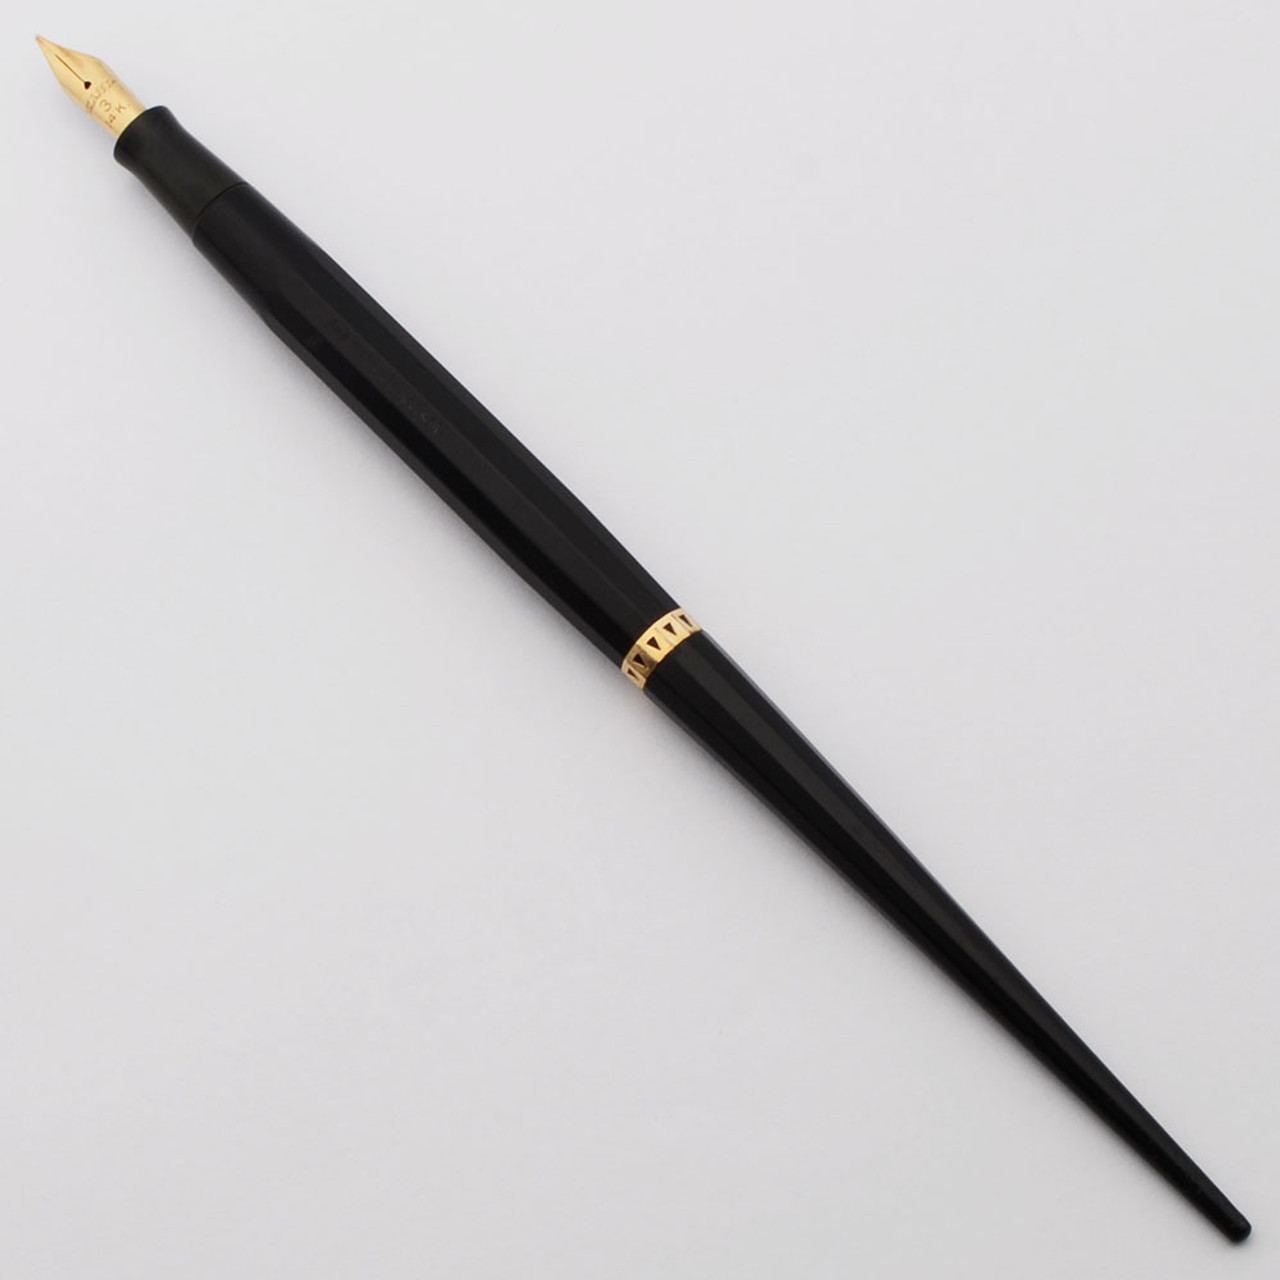 Wahl Doric Gold Seal Desk Fountain Pen (1930s) - Black w/GT, Lever Fill, Flexible 14k Wahl #3 Nib  (Very Nice, Restored)